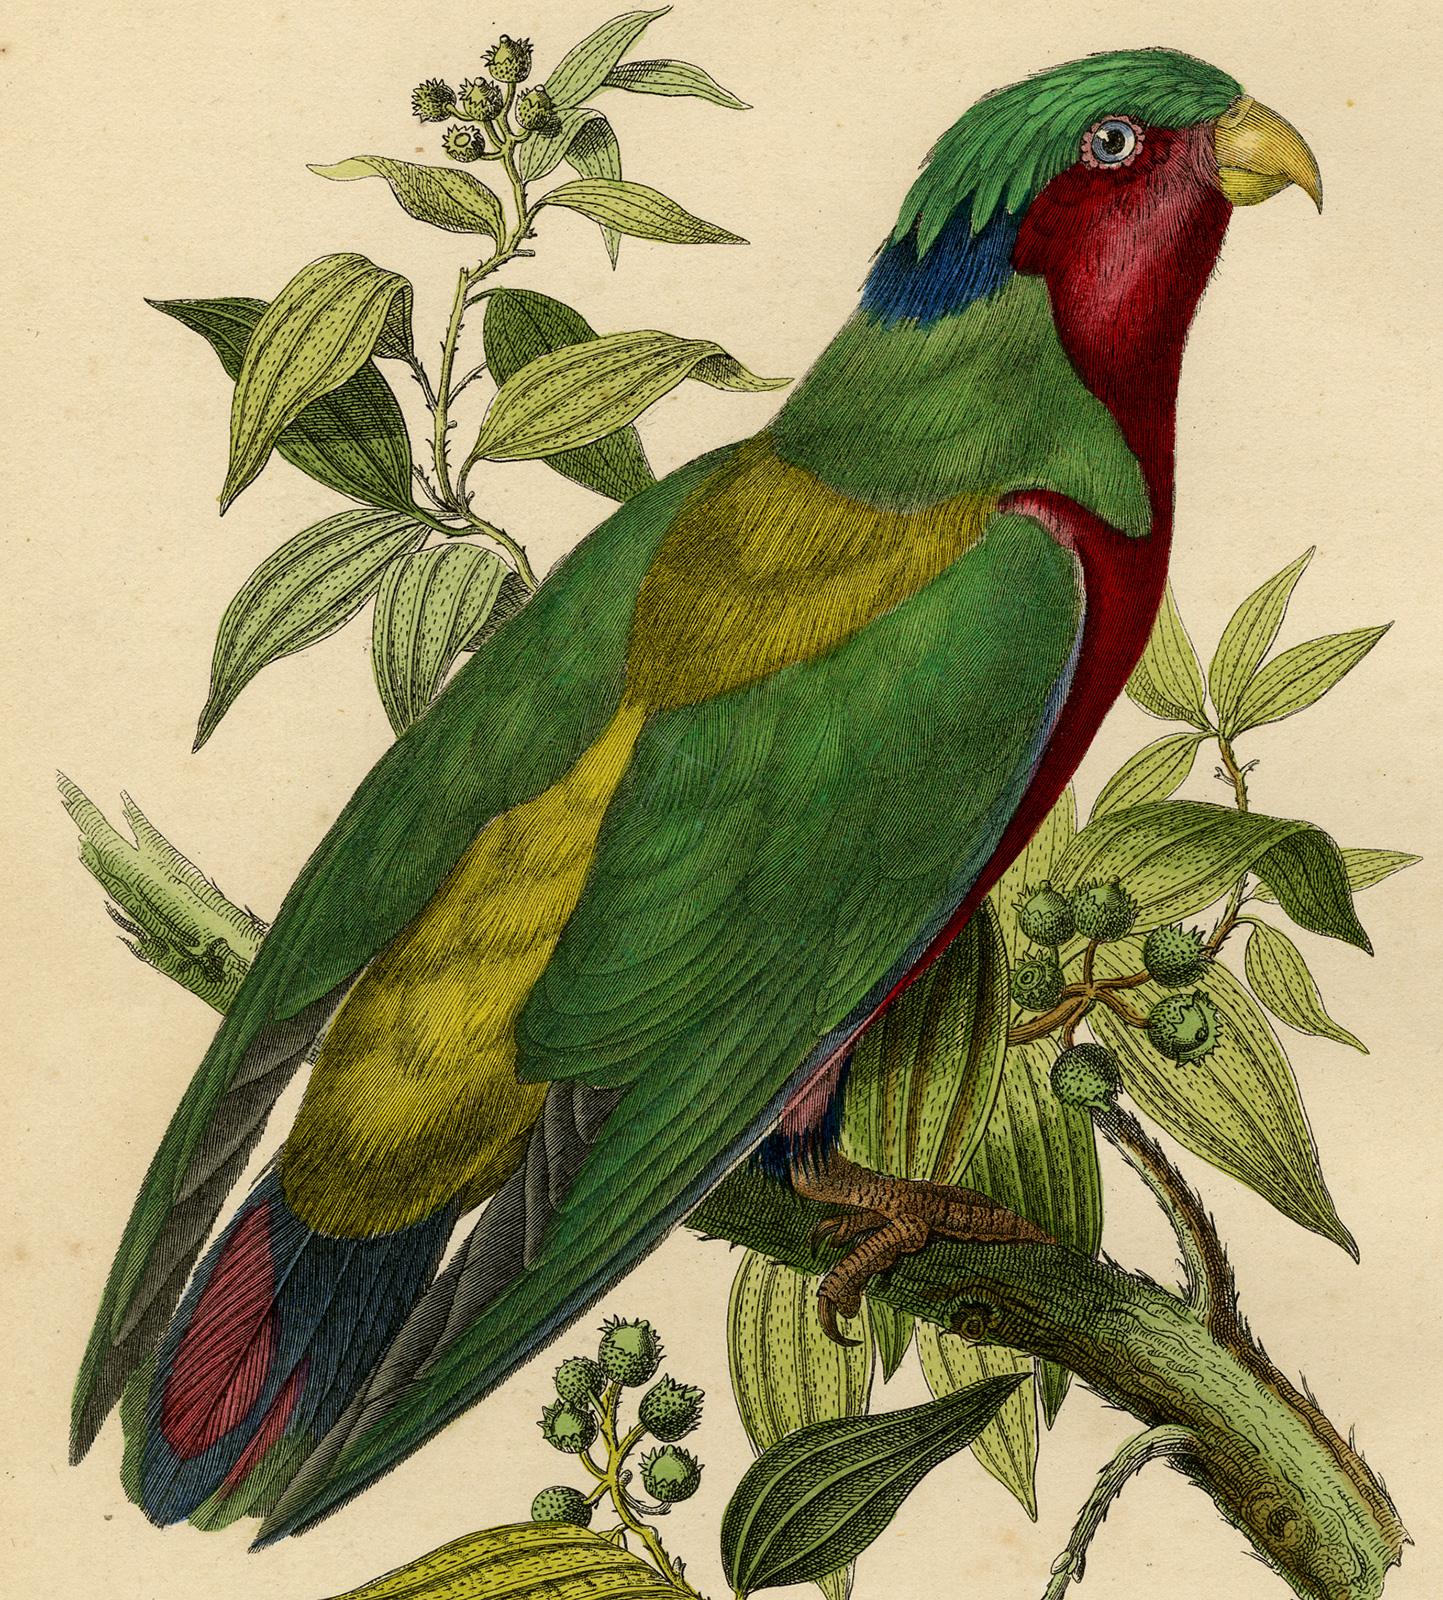 Antique print of a parrot - Le Vini ecarlate by Le Maout - Engraving - 19th c. - Beige Animal Print by Jean-Emmanuel-Marie Le Maout